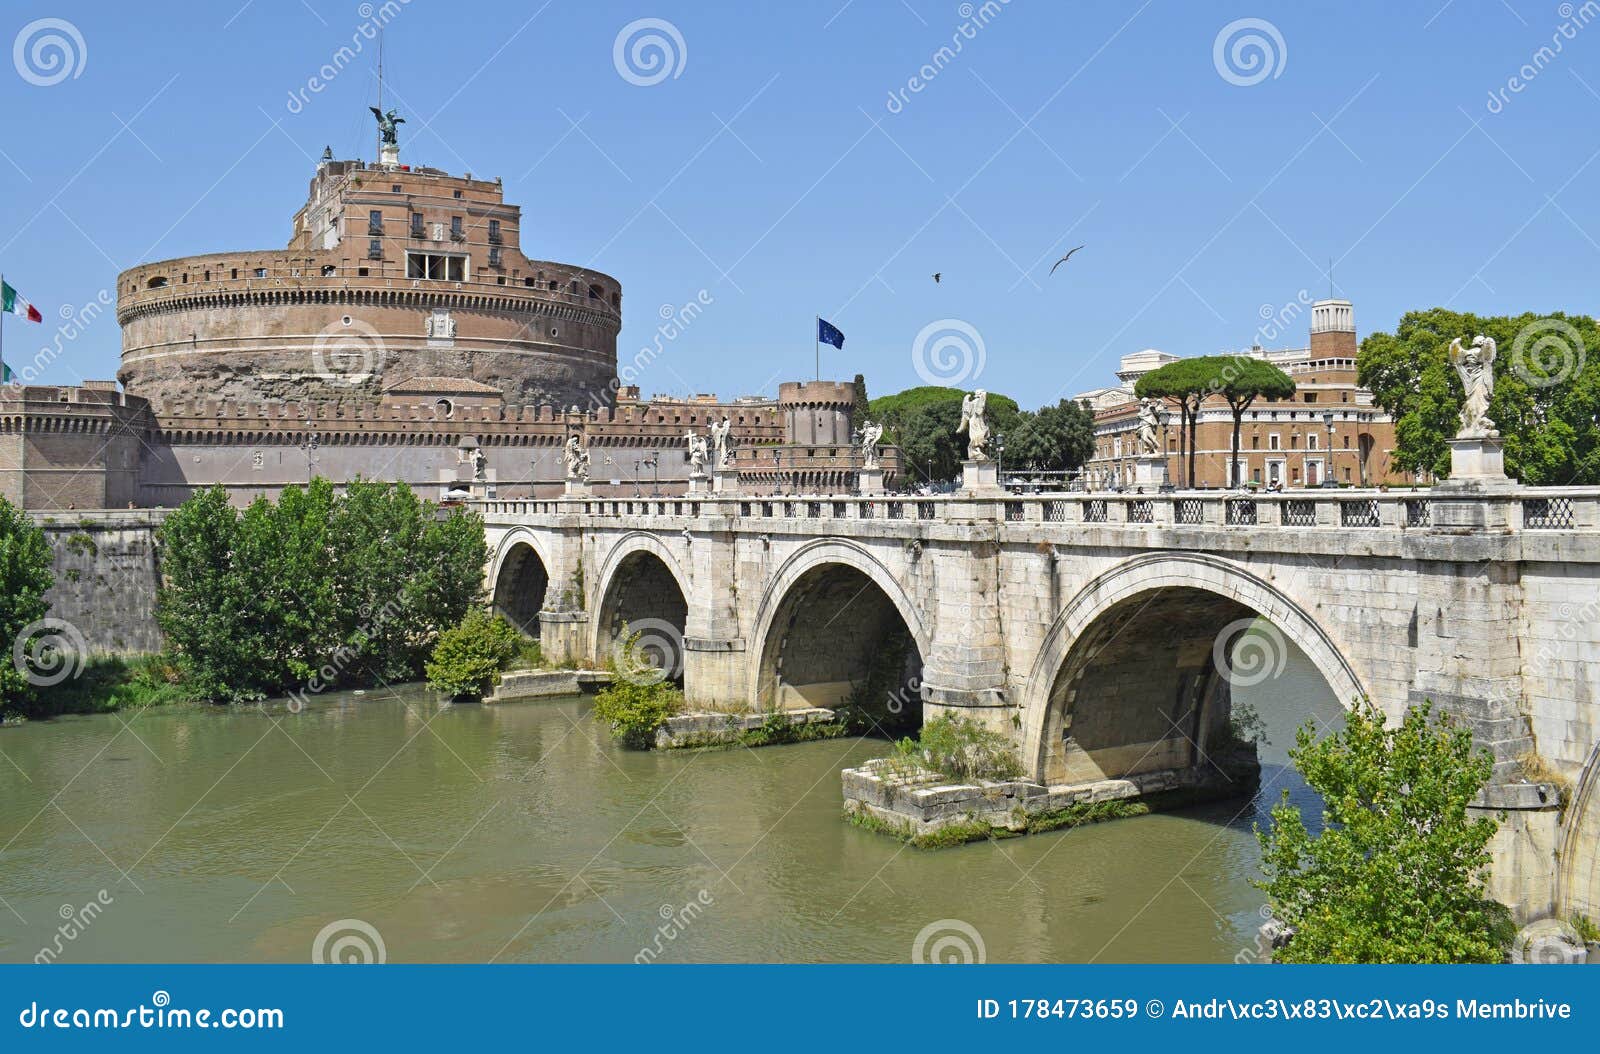 sant angelo bridge over rio tiber, rome